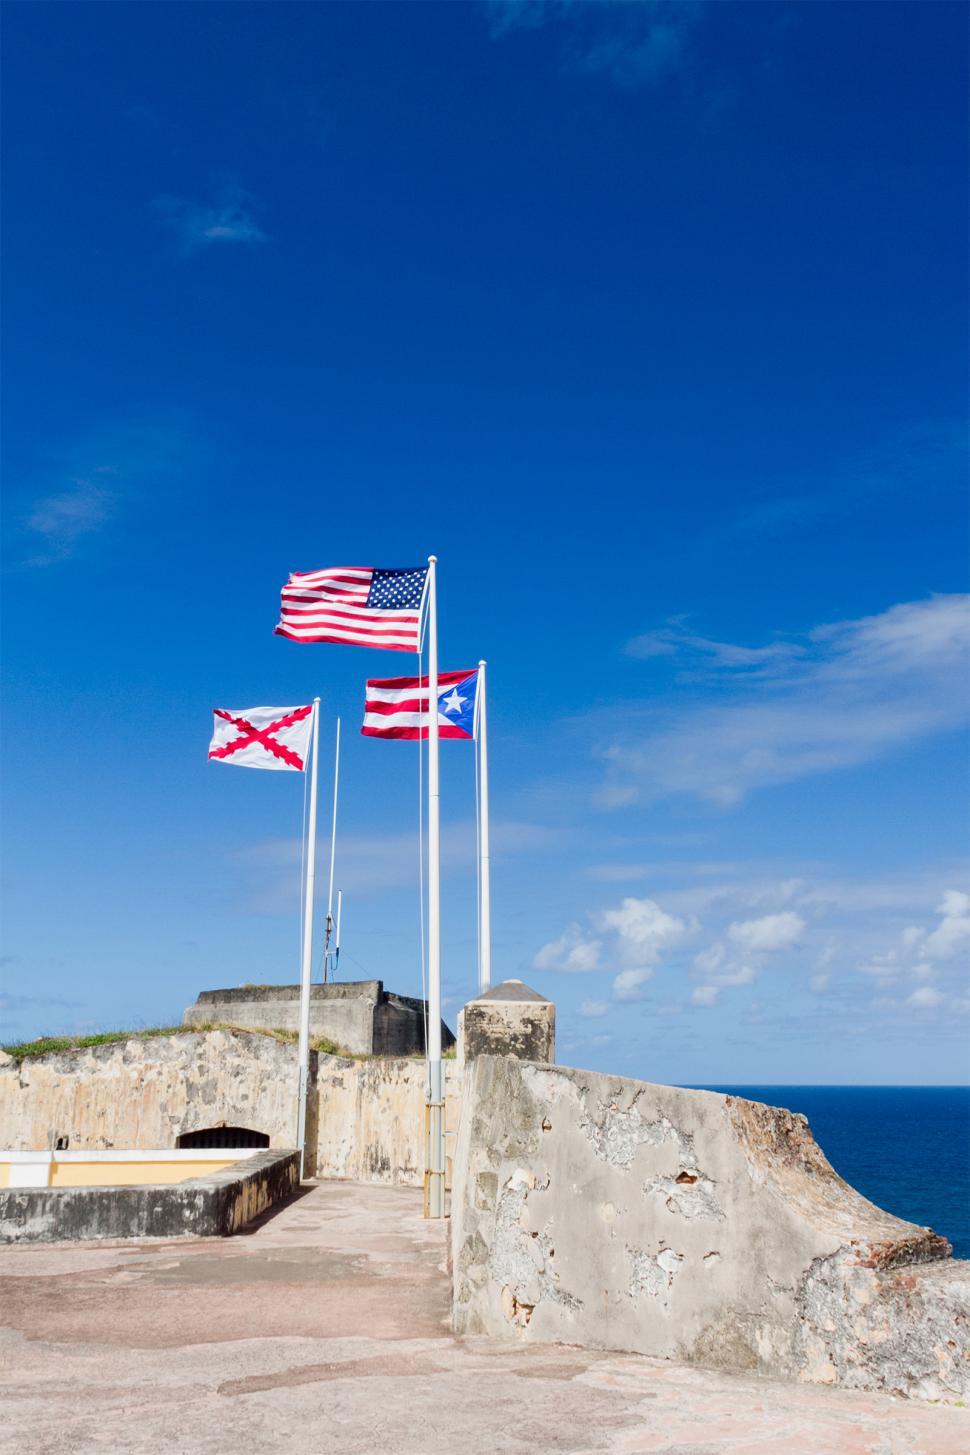 Free Image of Puerto Rico 